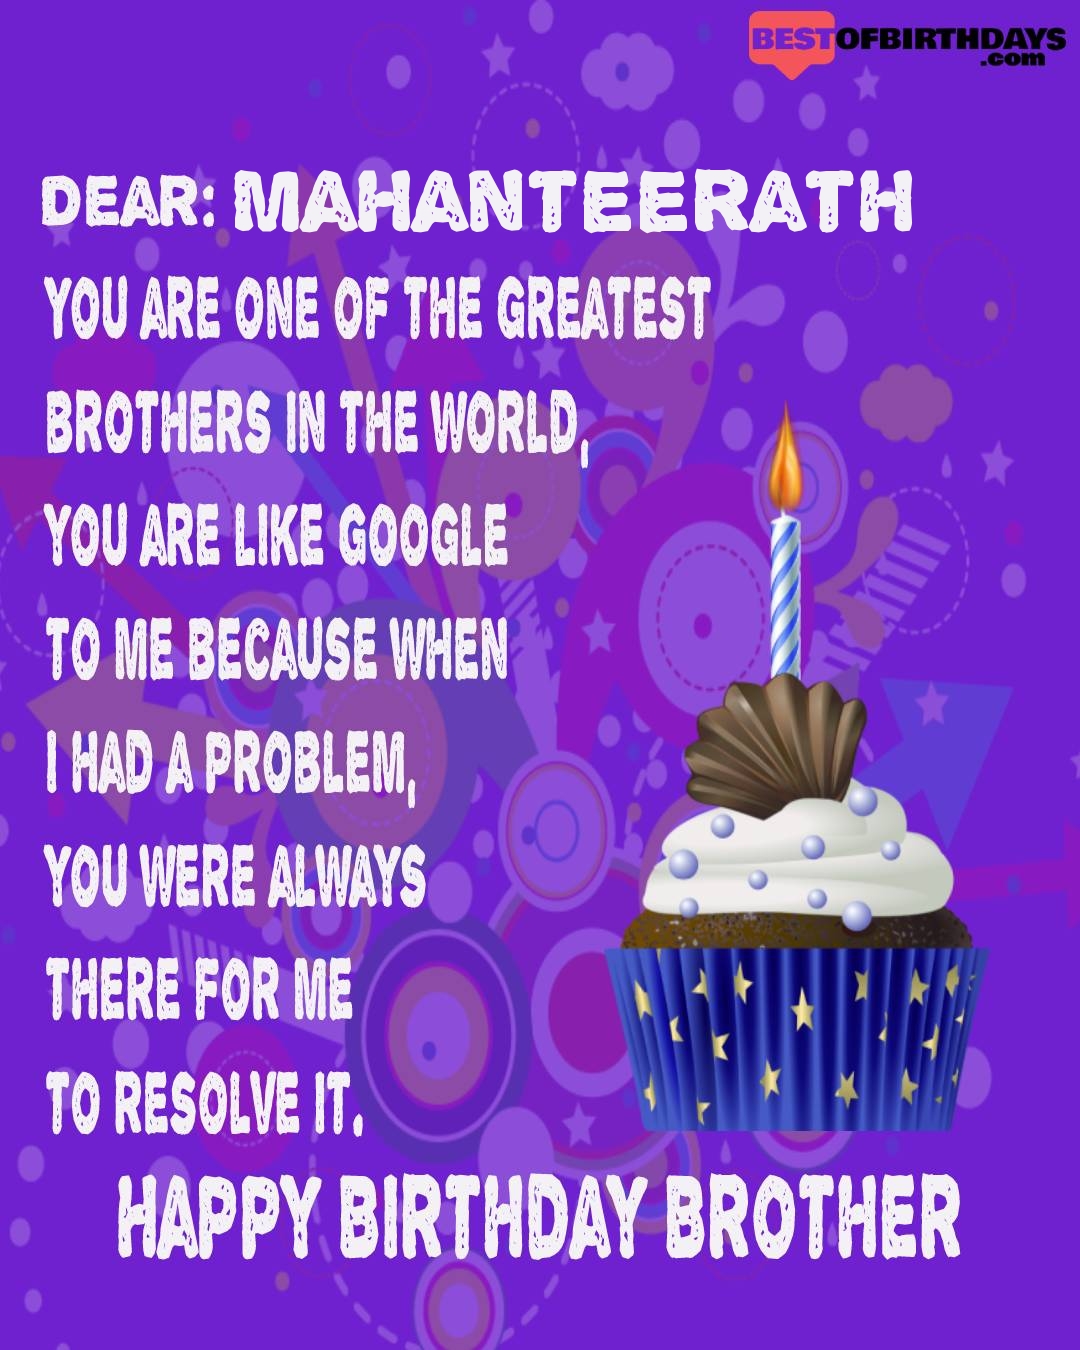 Happy birthday mahanteerath bhai brother bro